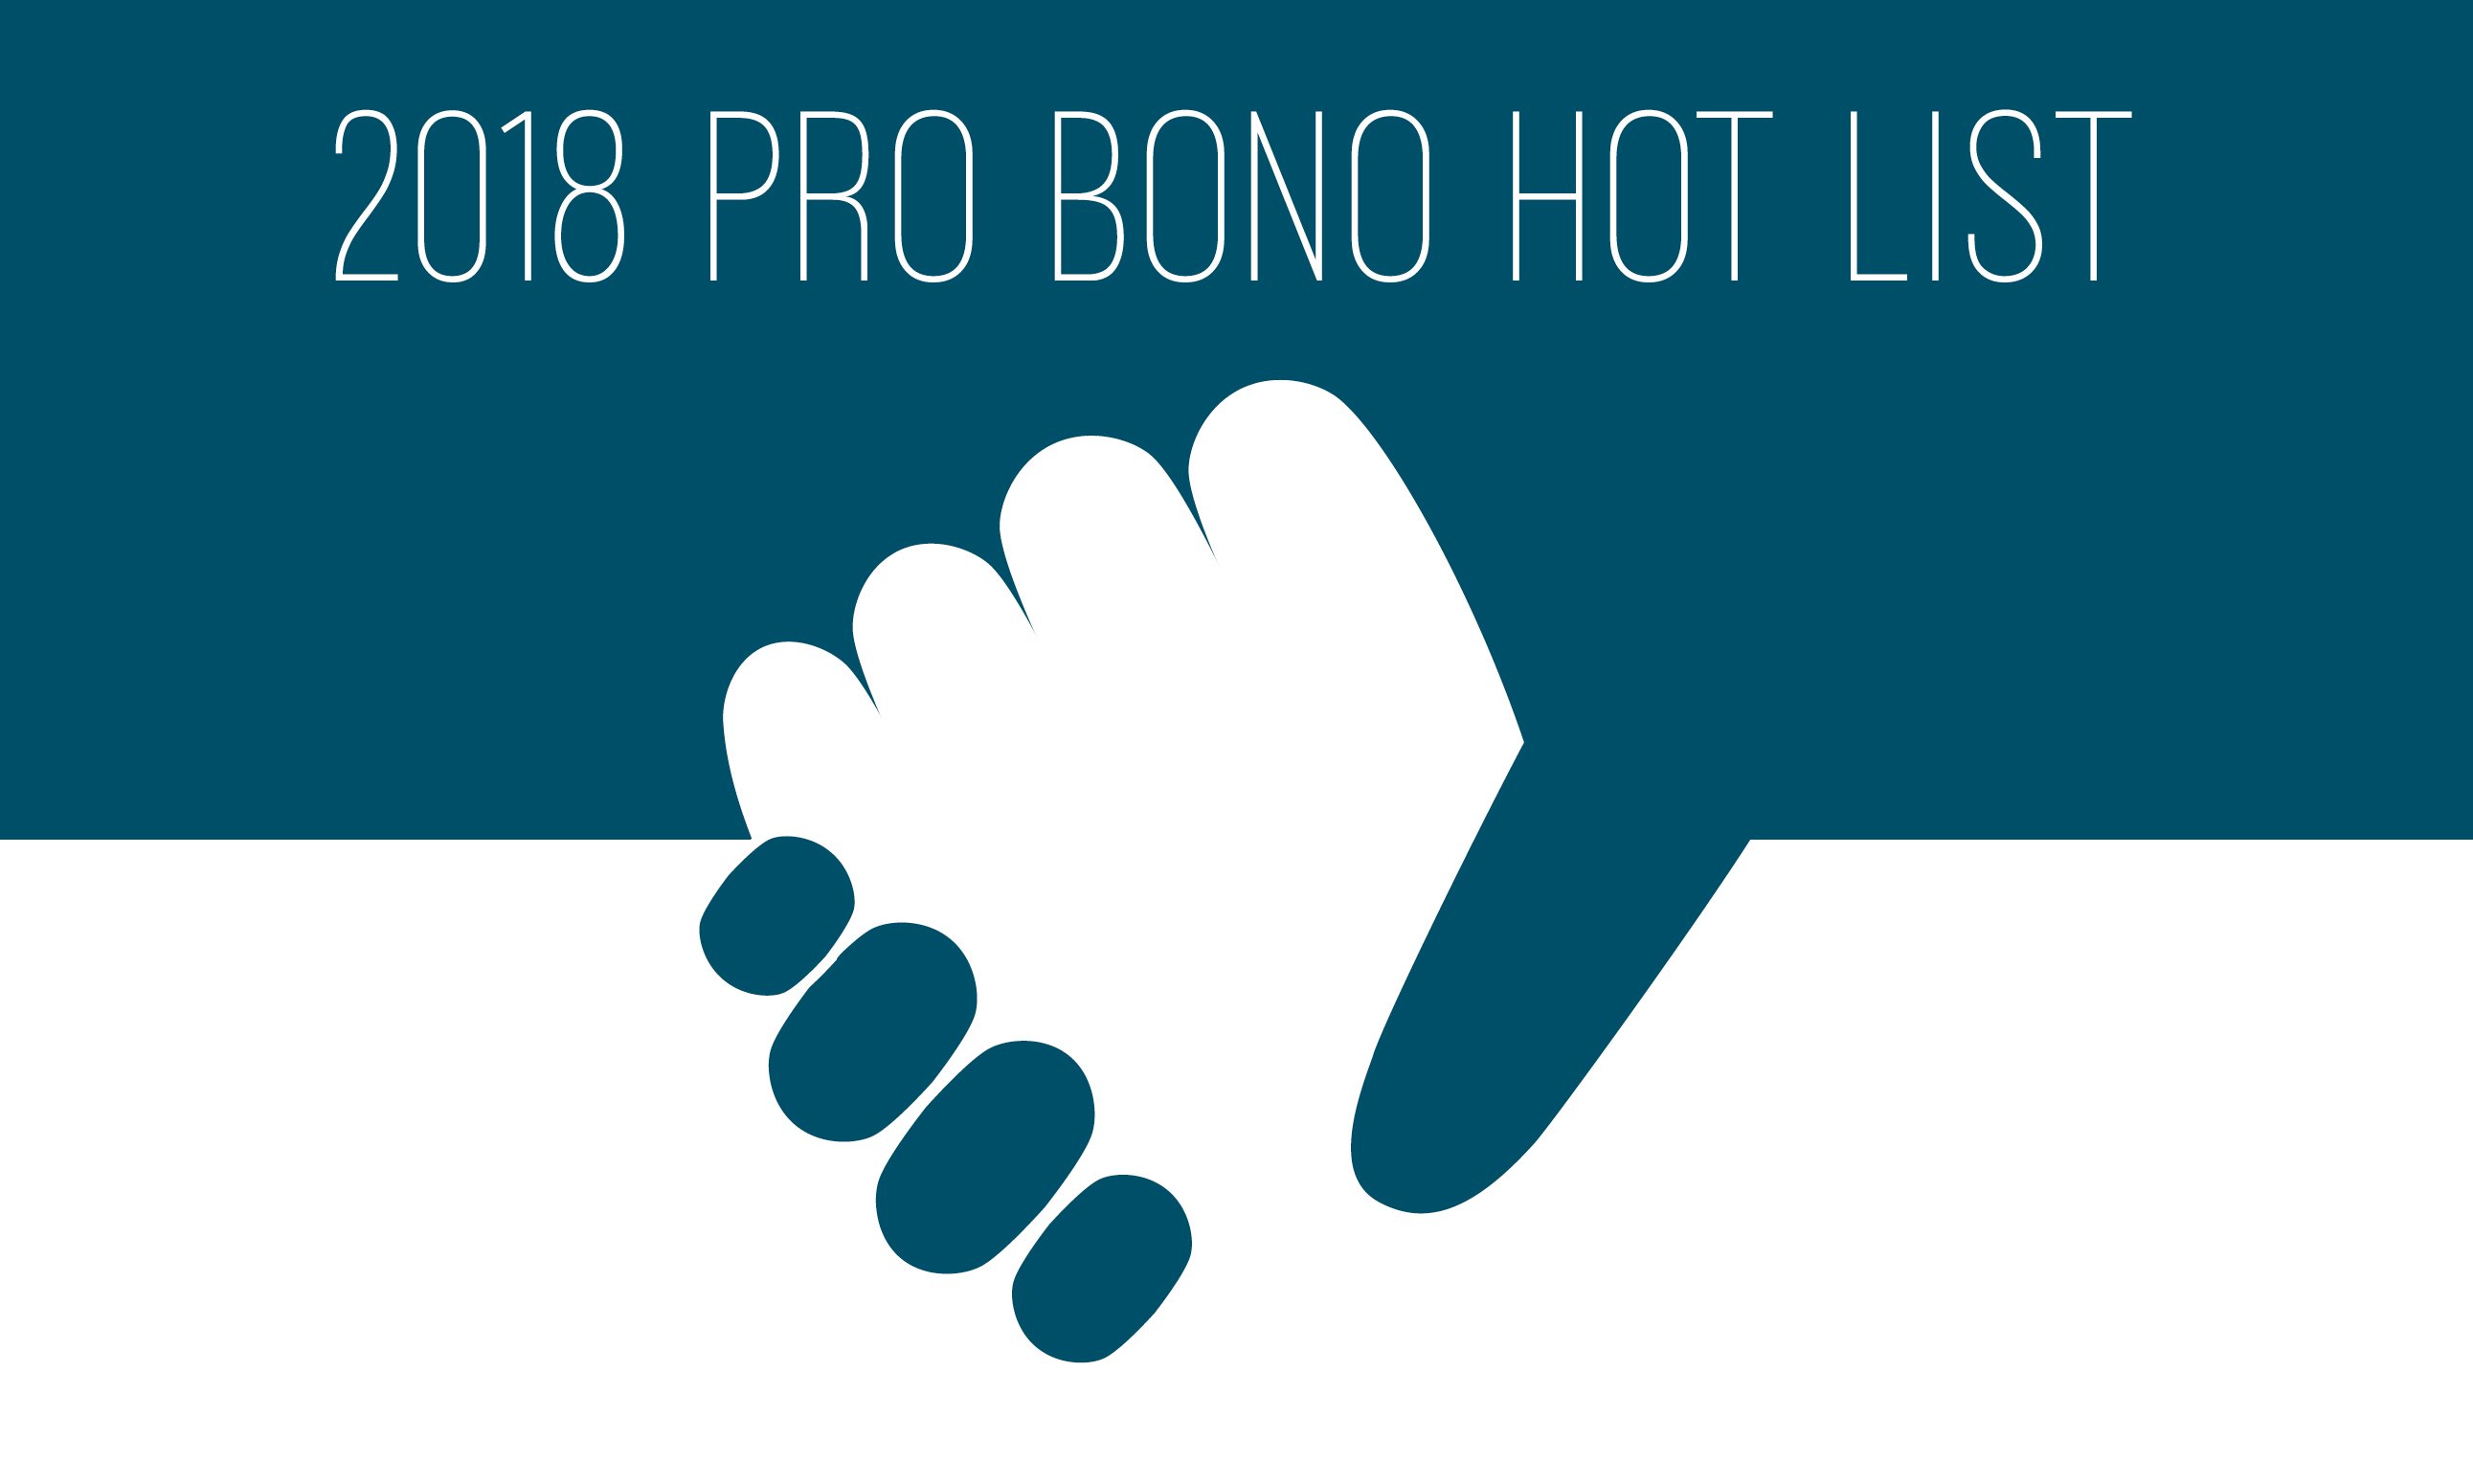 The 2018 Pro Bono Hot List